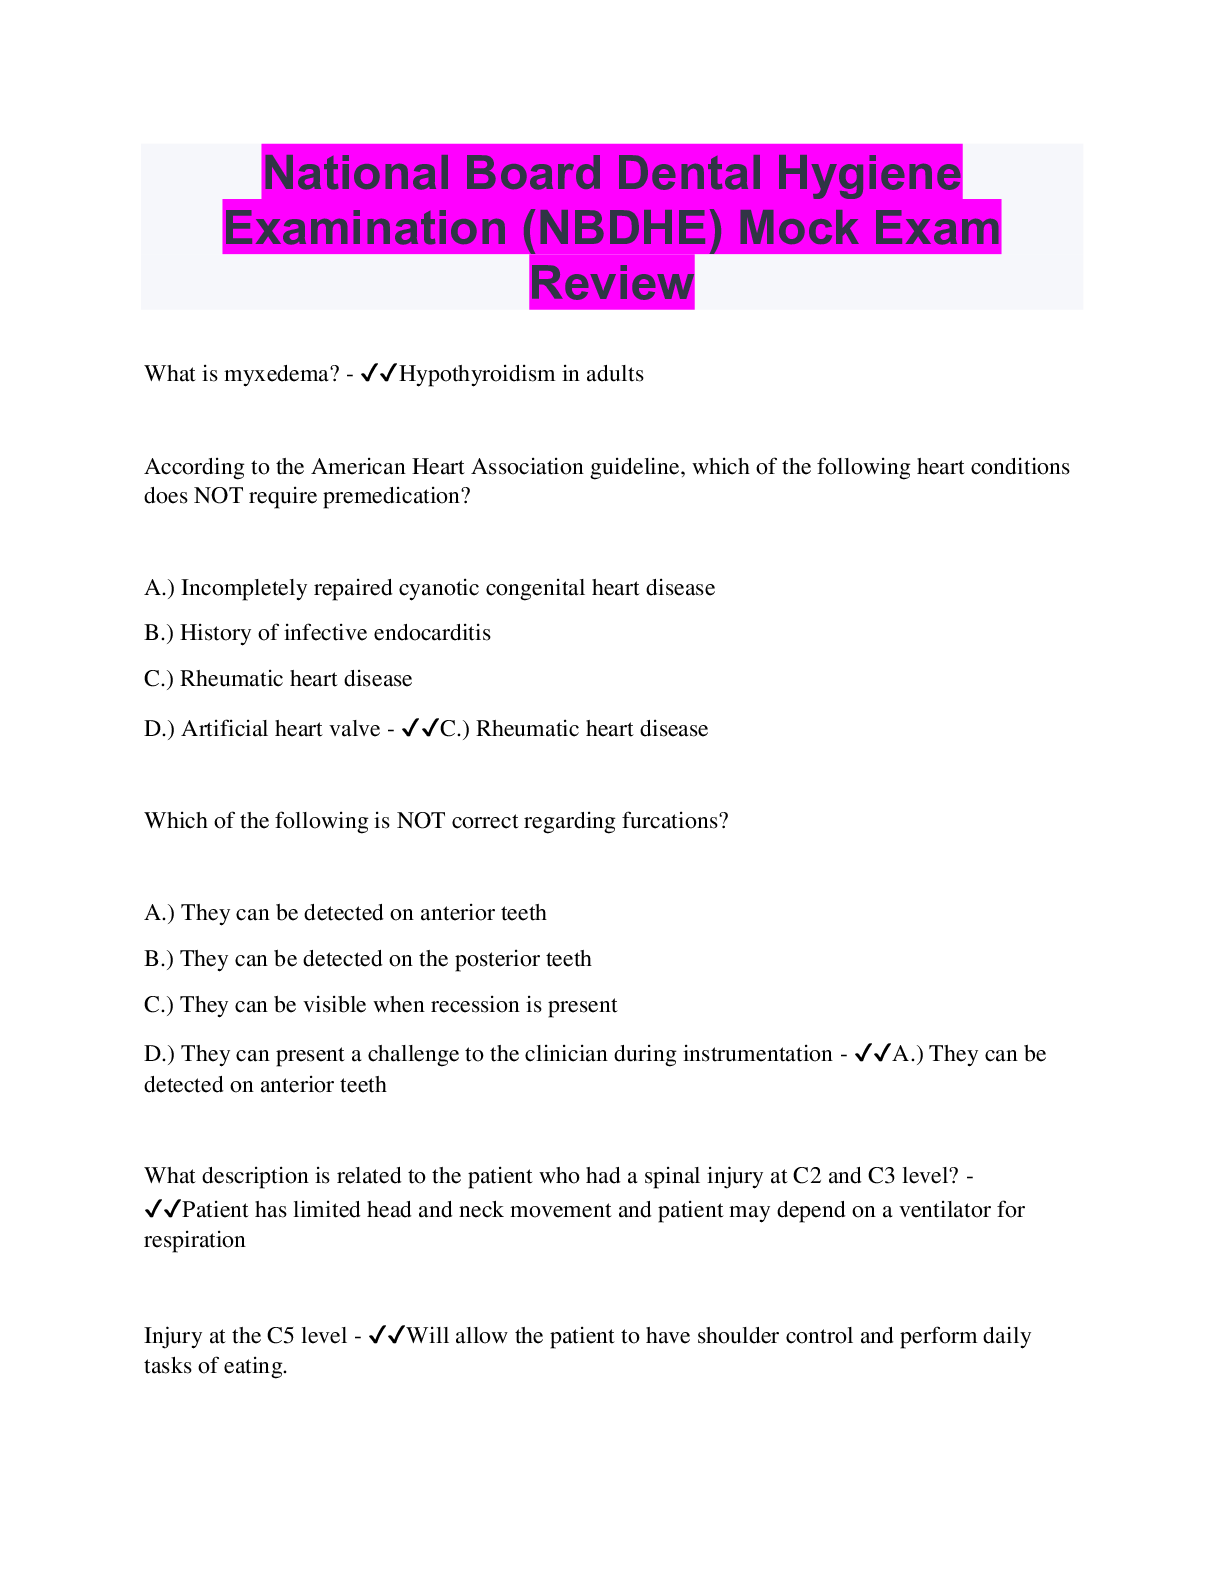 National Board Dental Hygiene Examination (NBDHE) Mock Exam Review